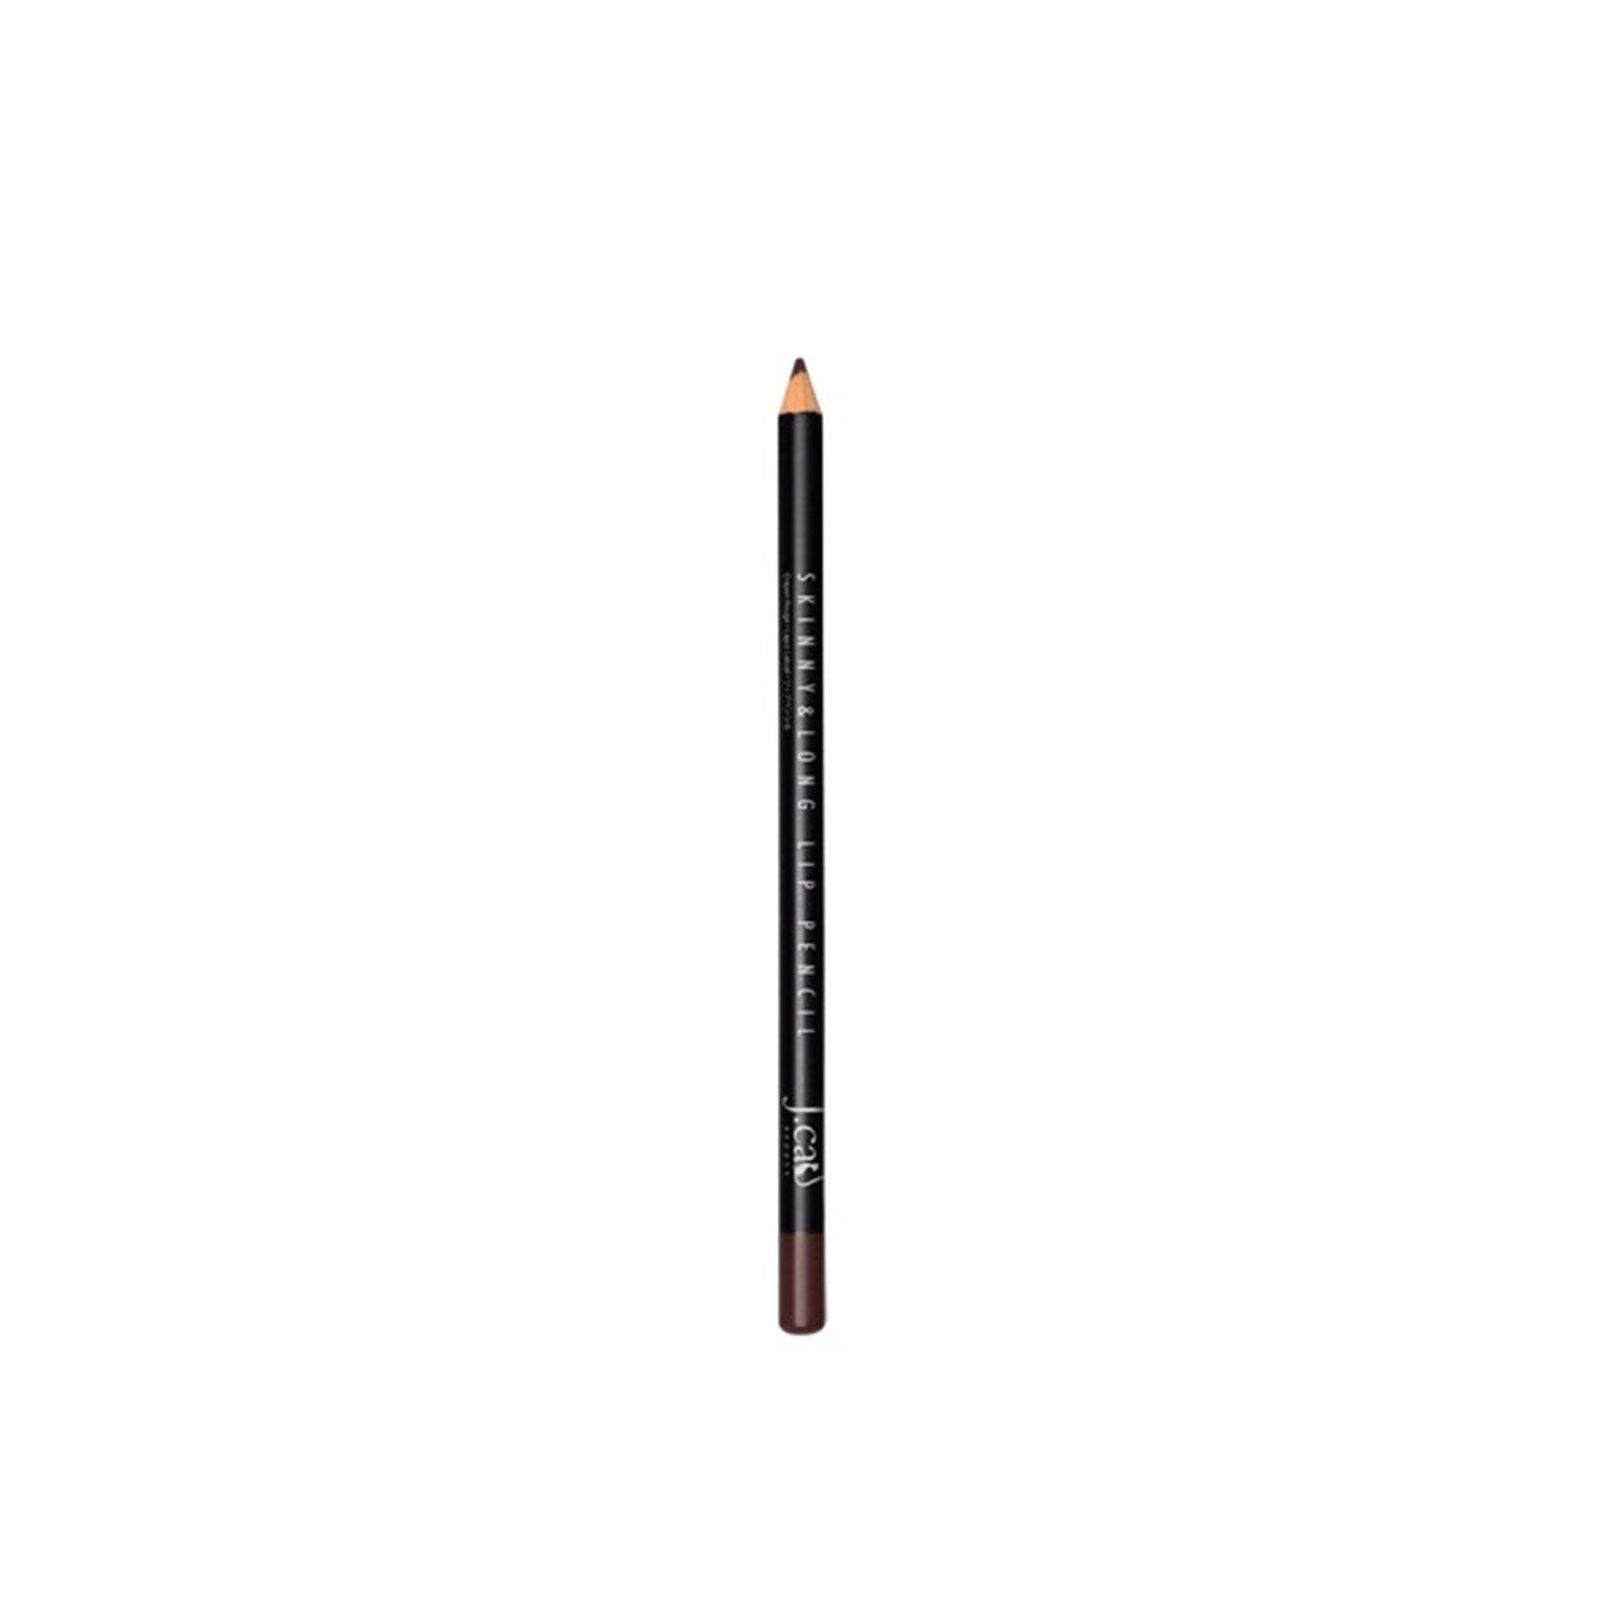 J.Cat Skinny & Long Lip Pencil 102 Chocolate 2g (0.08 oz)